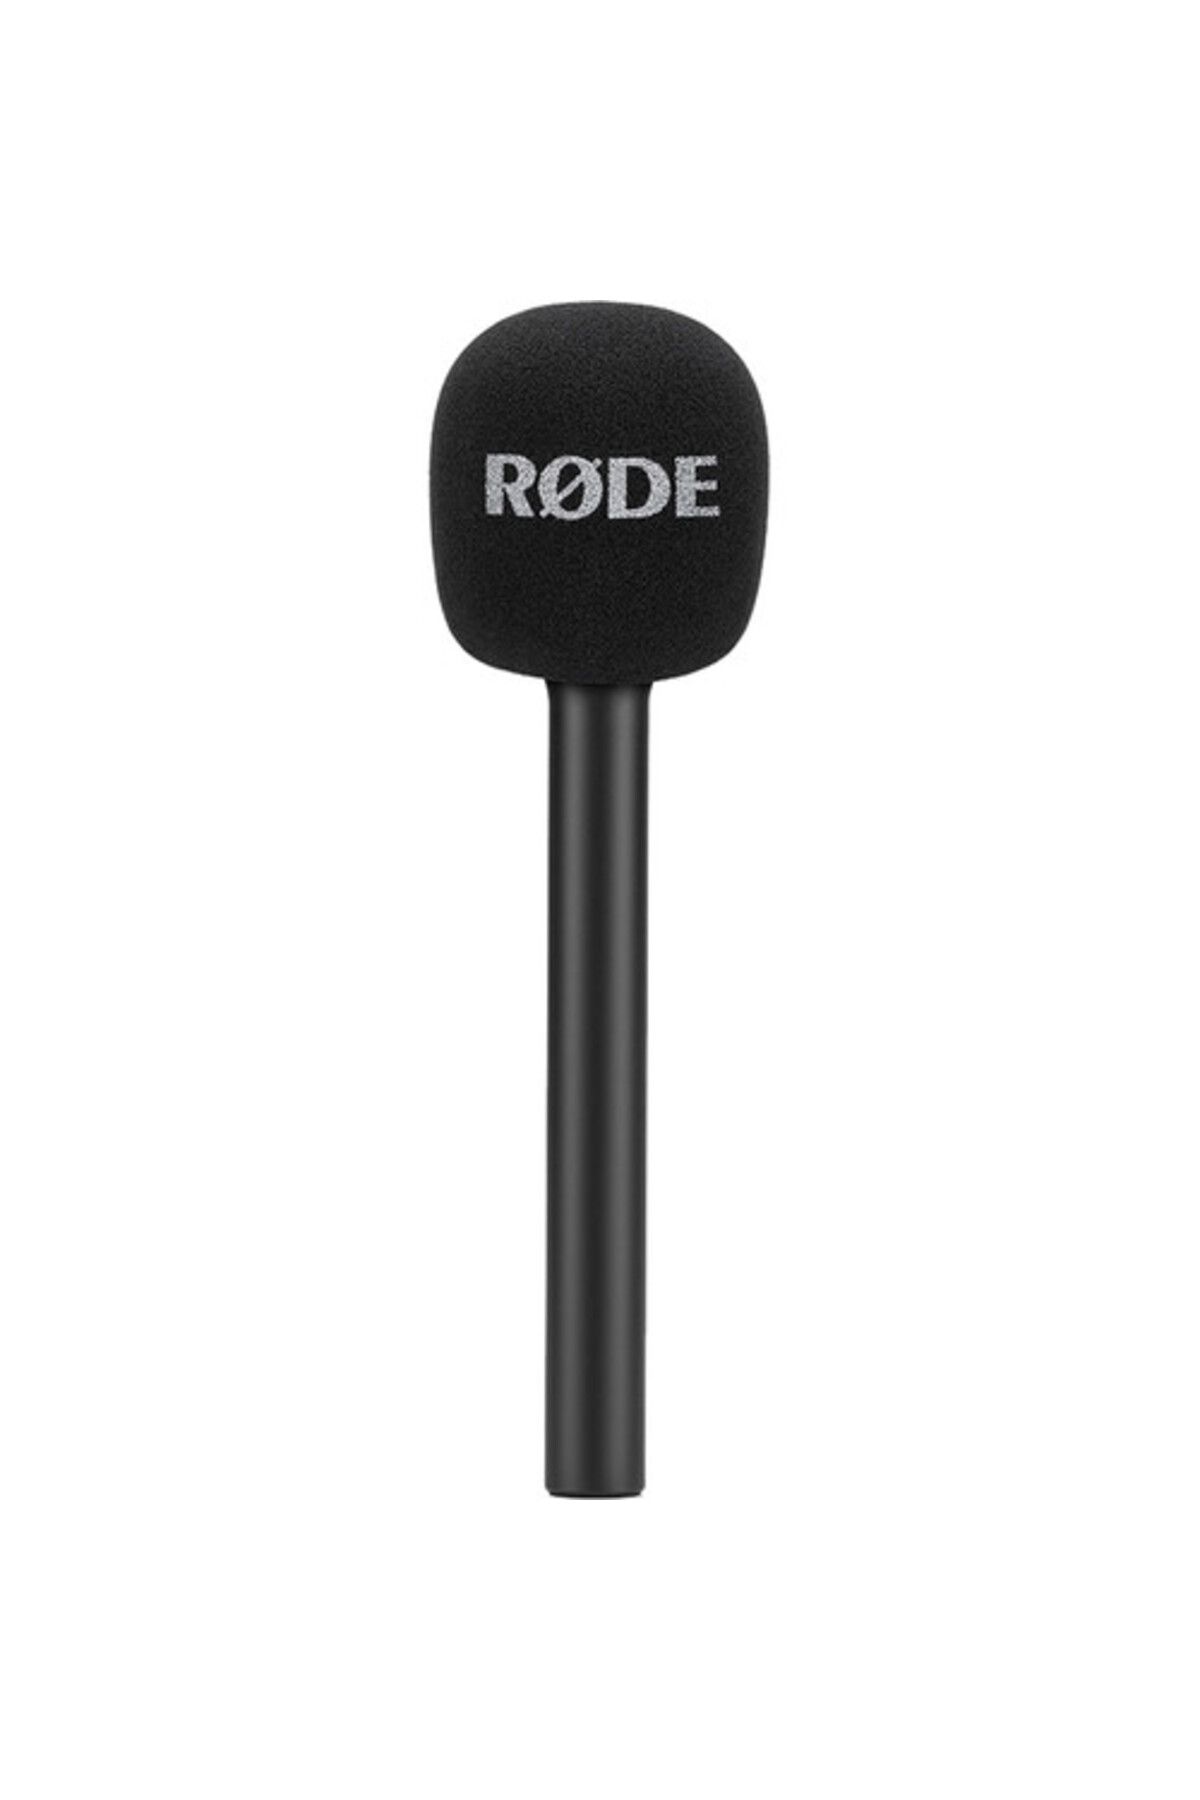 Rode Interview Go Wireless Go Için El Mikrofon Adaptörü